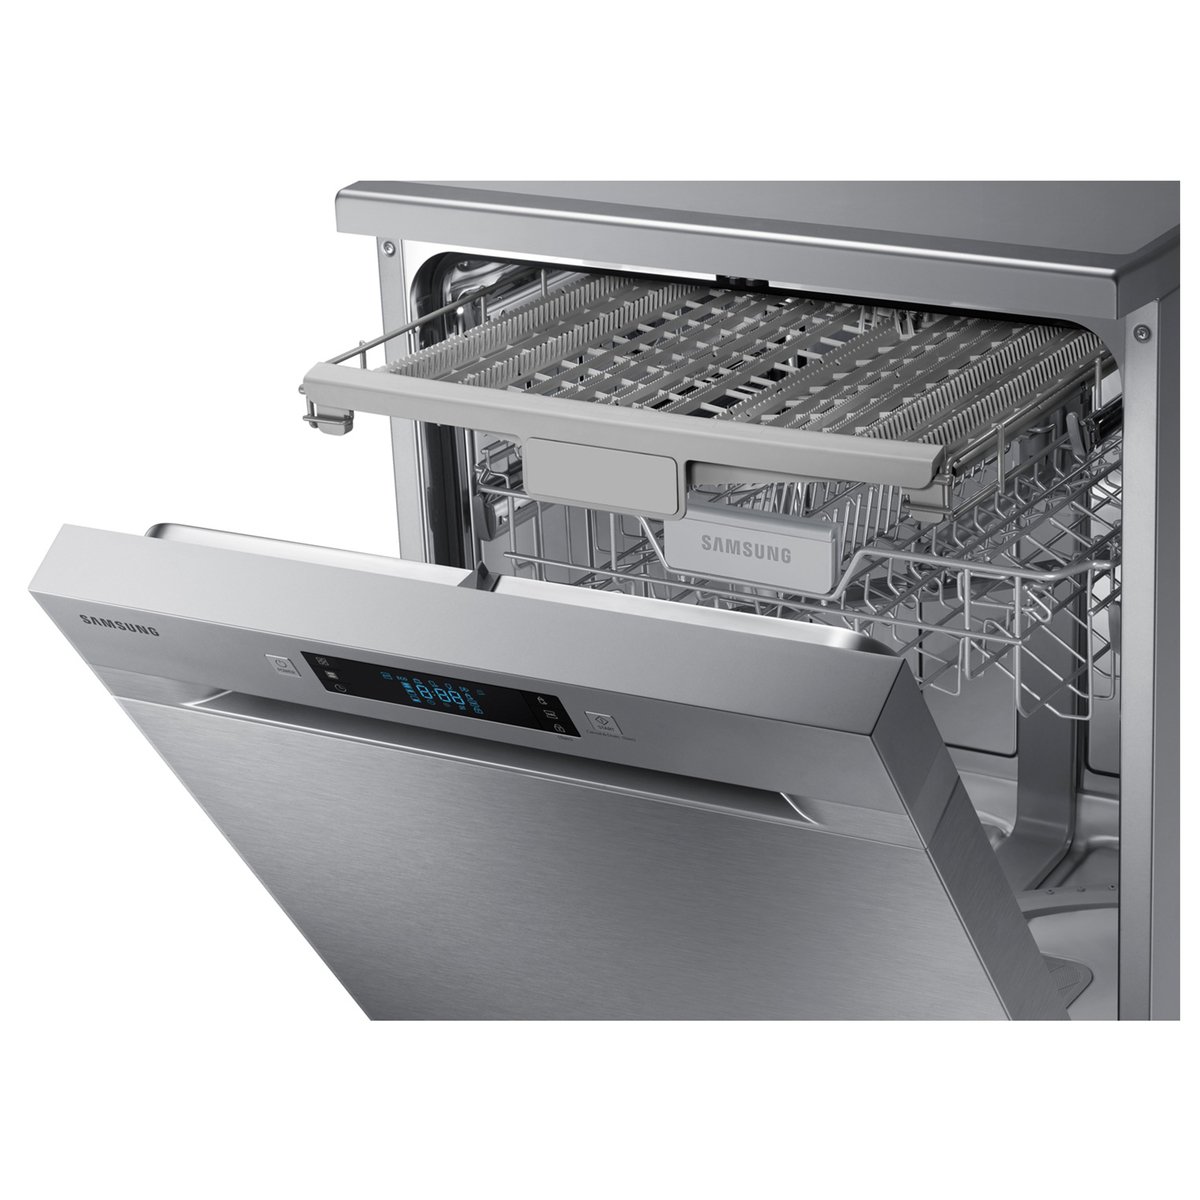 Samsung Dishwasher DW60M6050FS 7programs